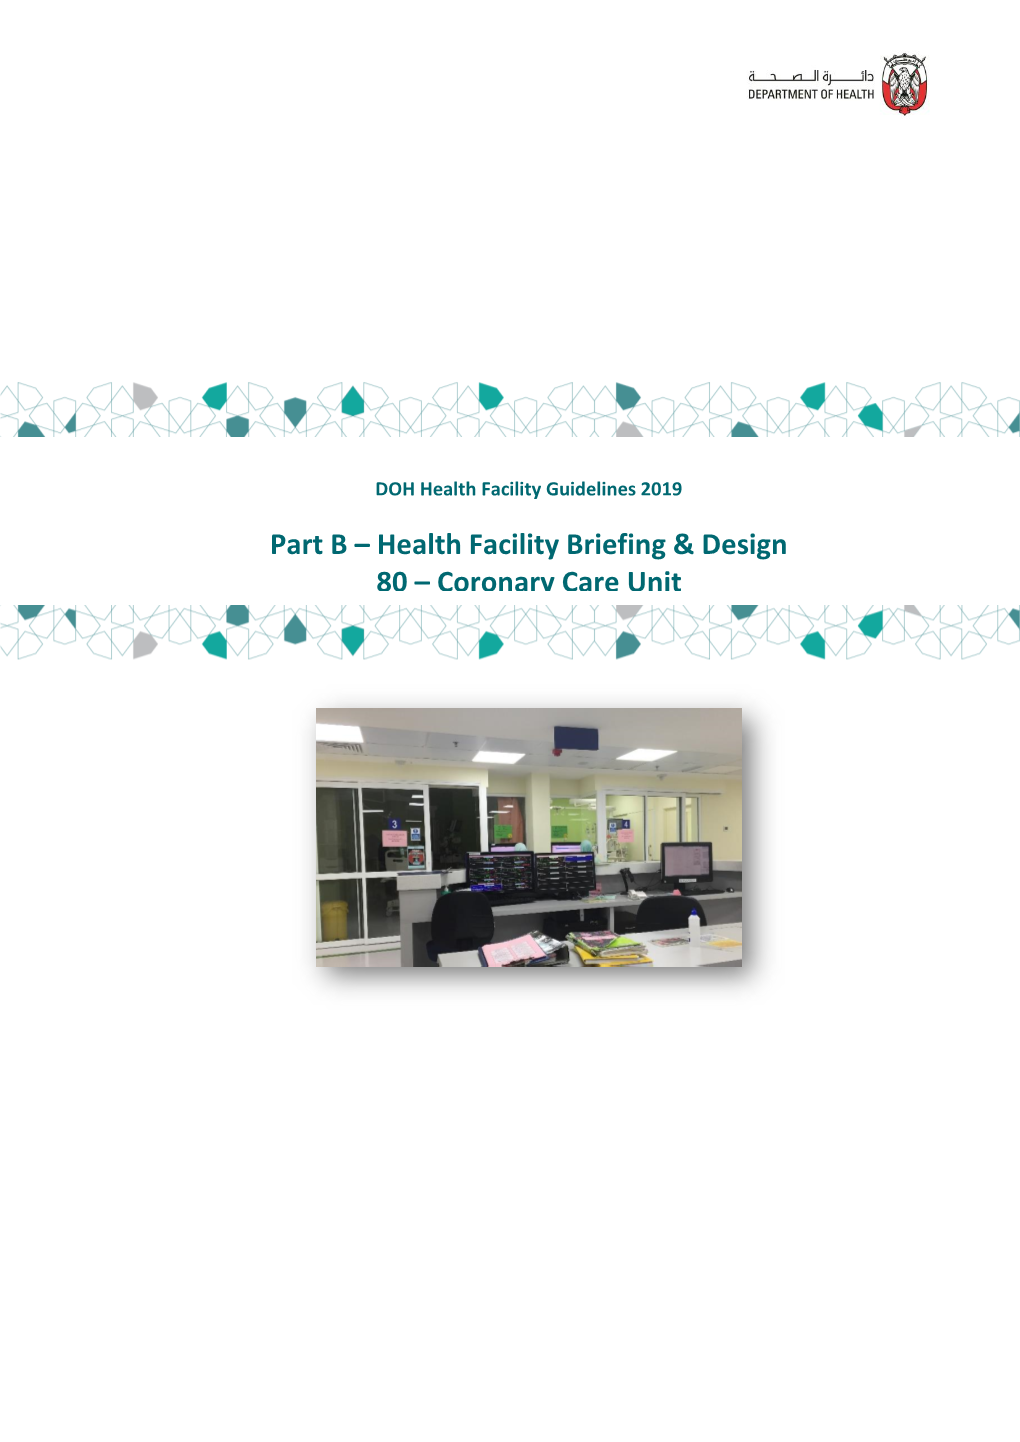 Part B – Health Facility Briefing & Design 80 – Coronary Care Unit